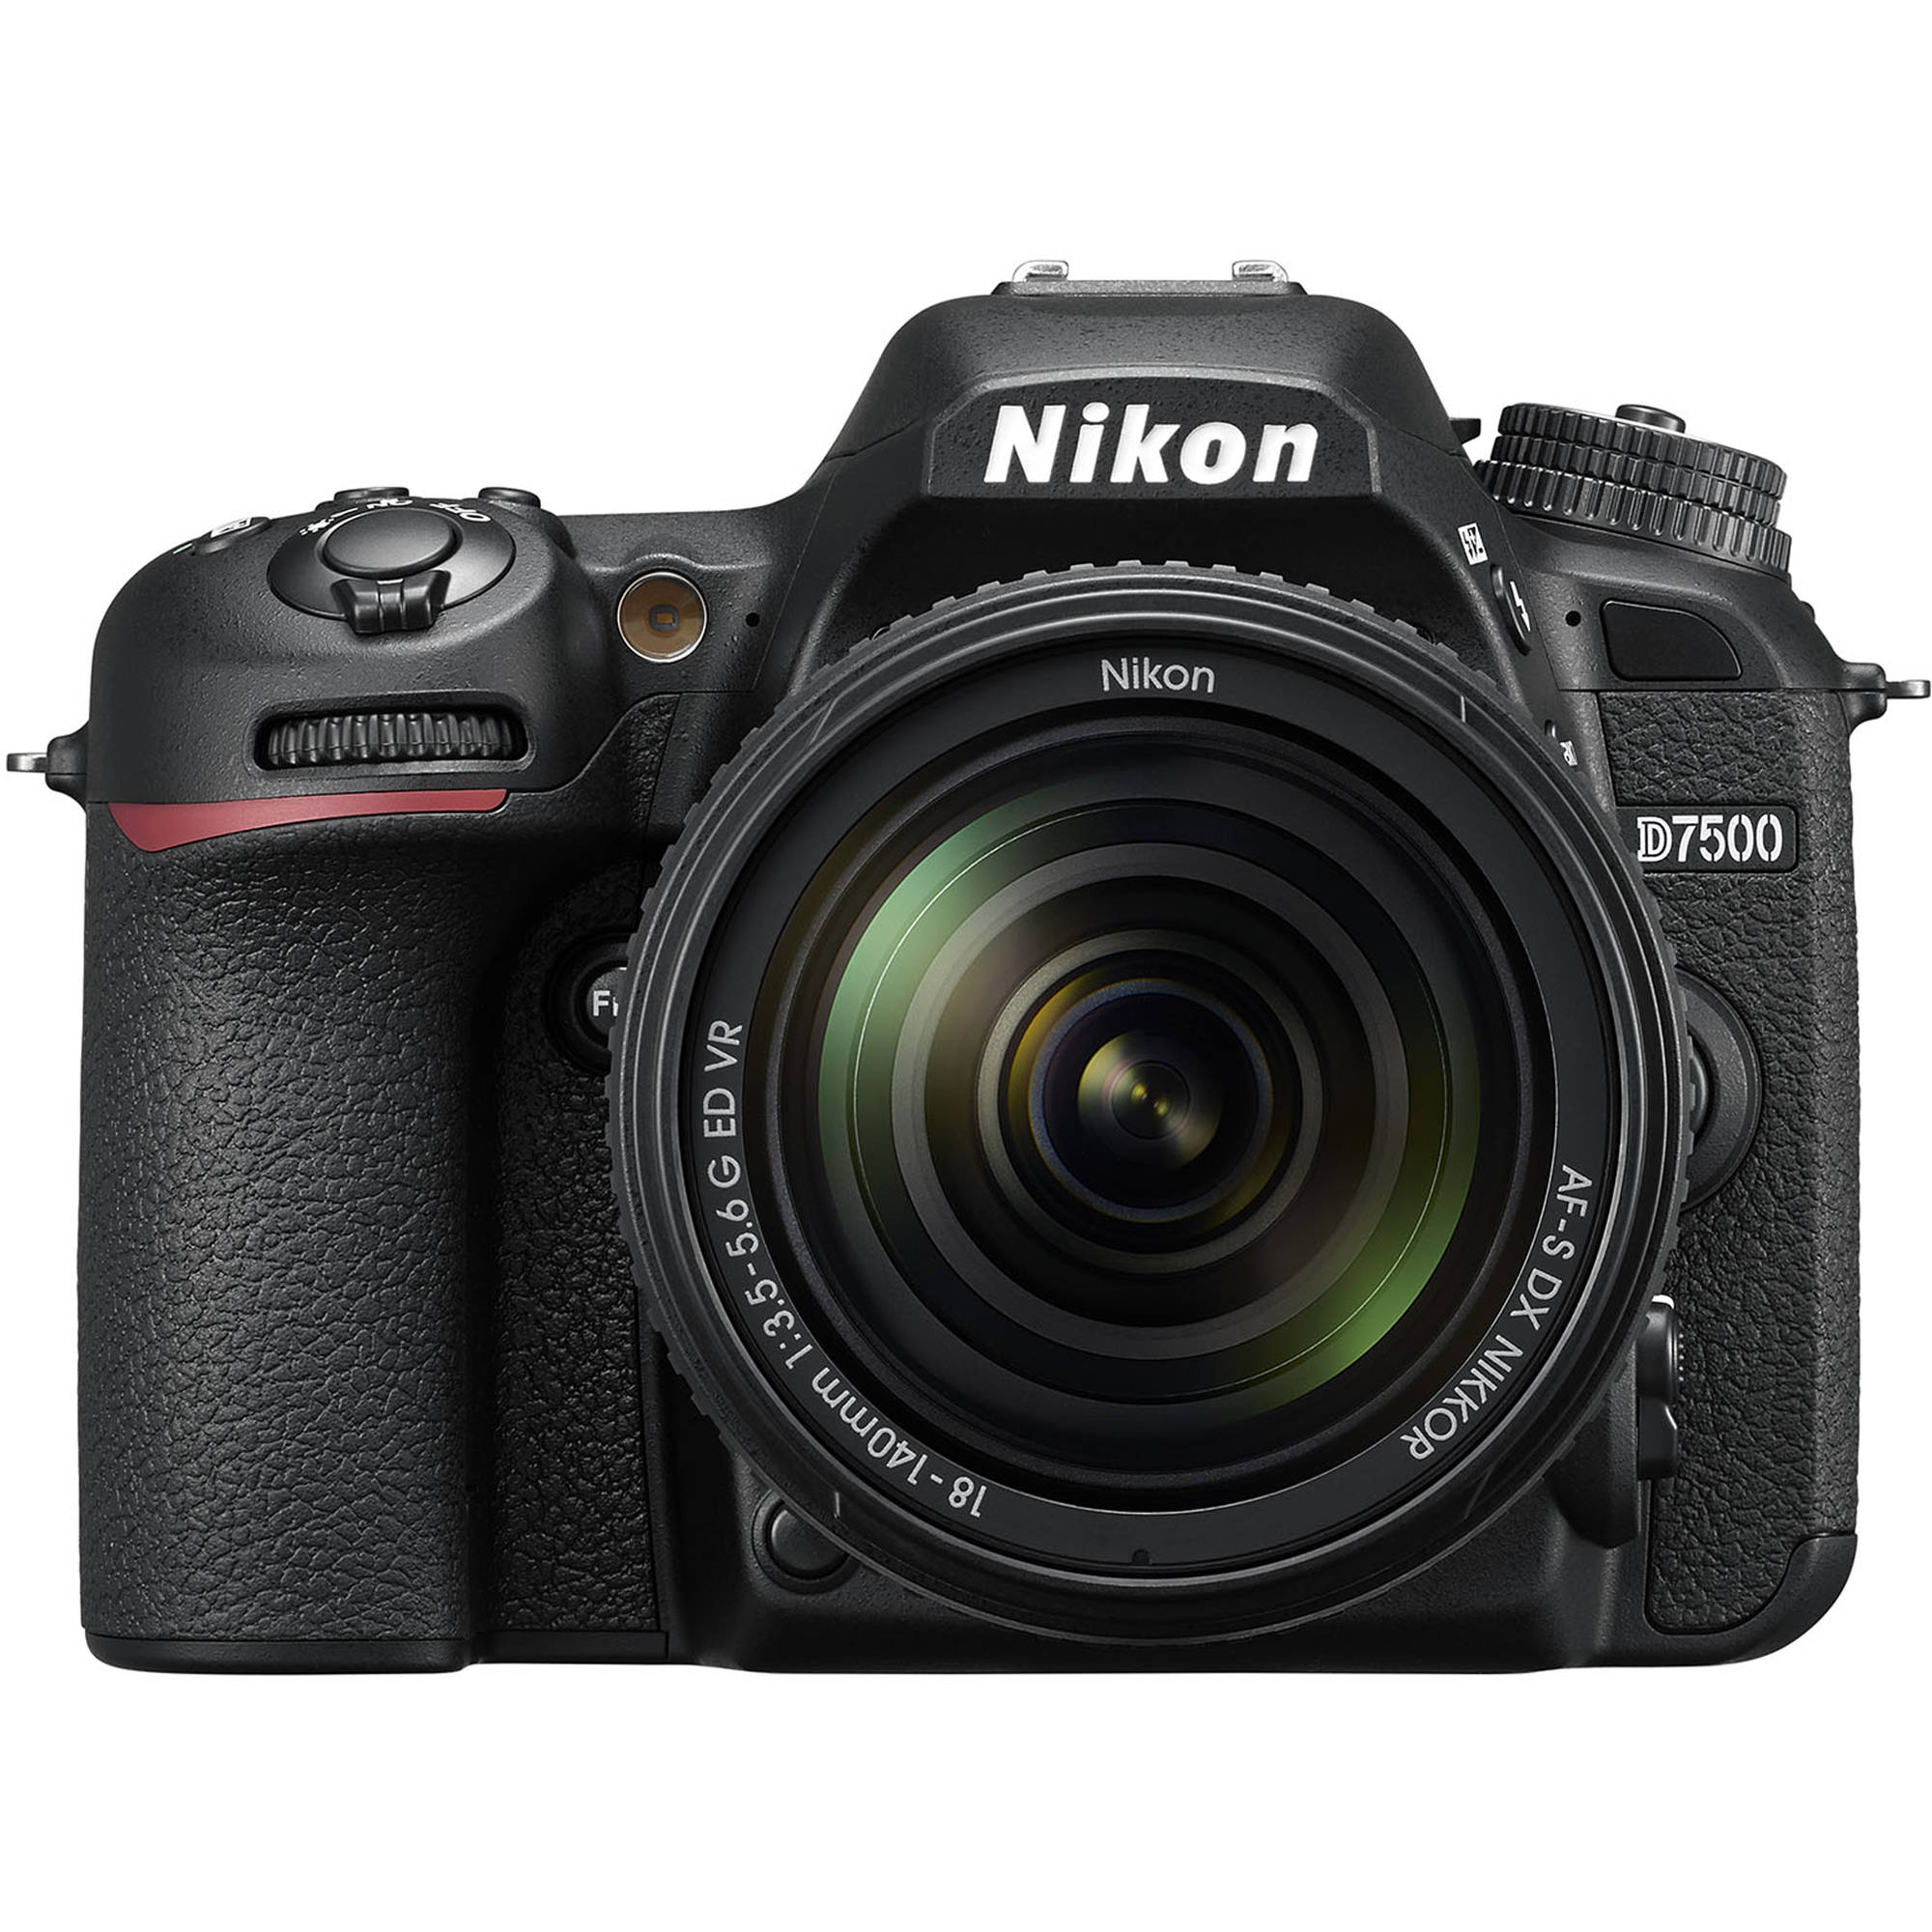 Nikon D7500 dslr camera with 18-140mm lens - The Camerashop